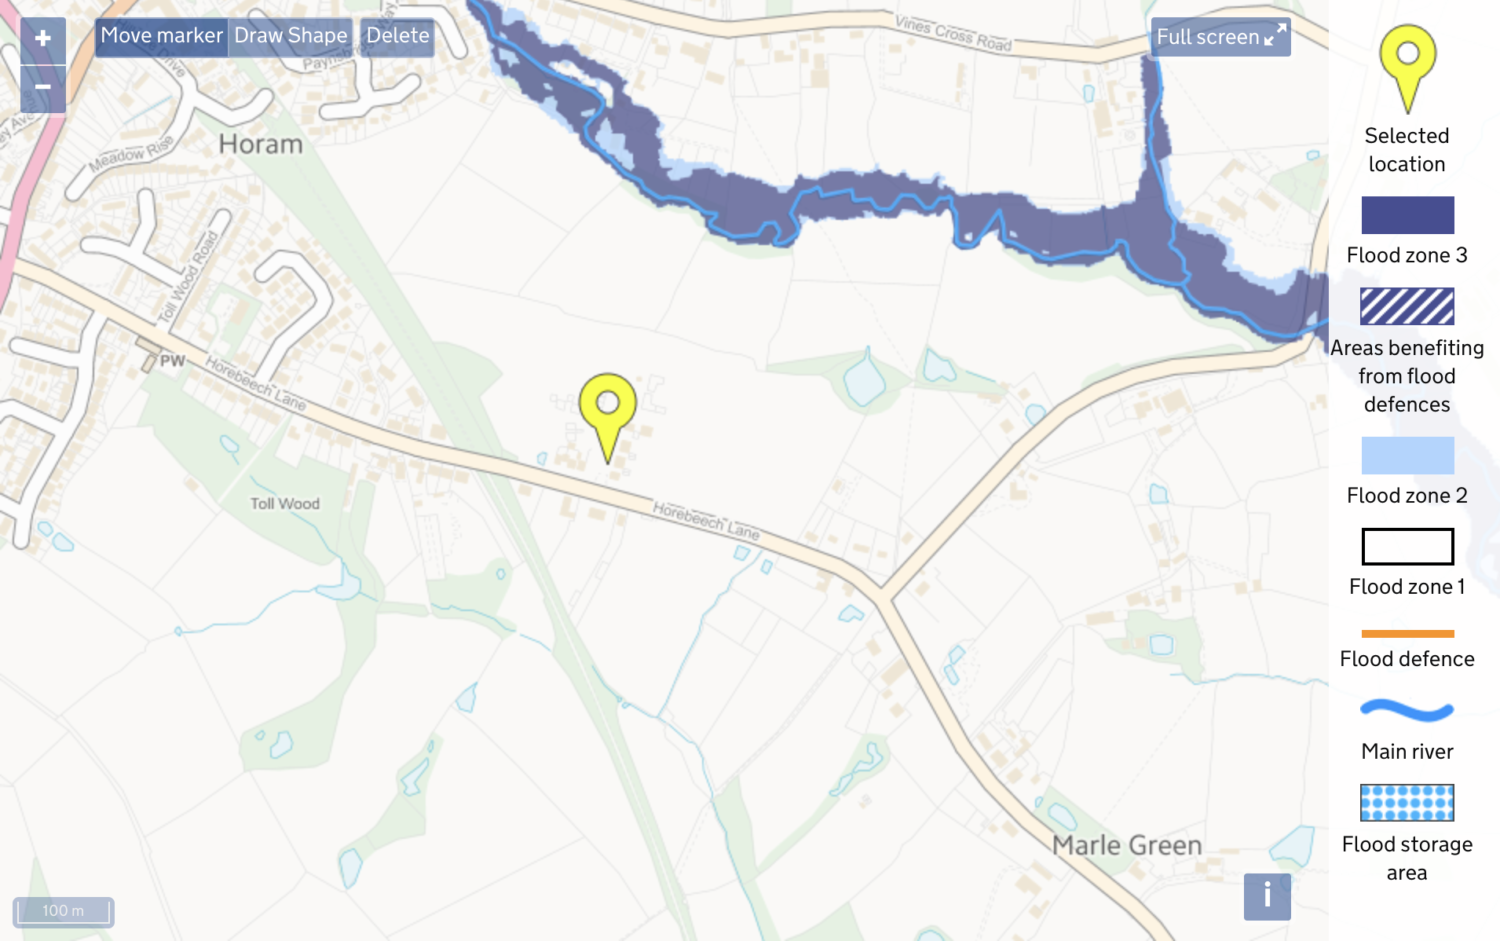 Rosemead Farm Flood Map For Planning